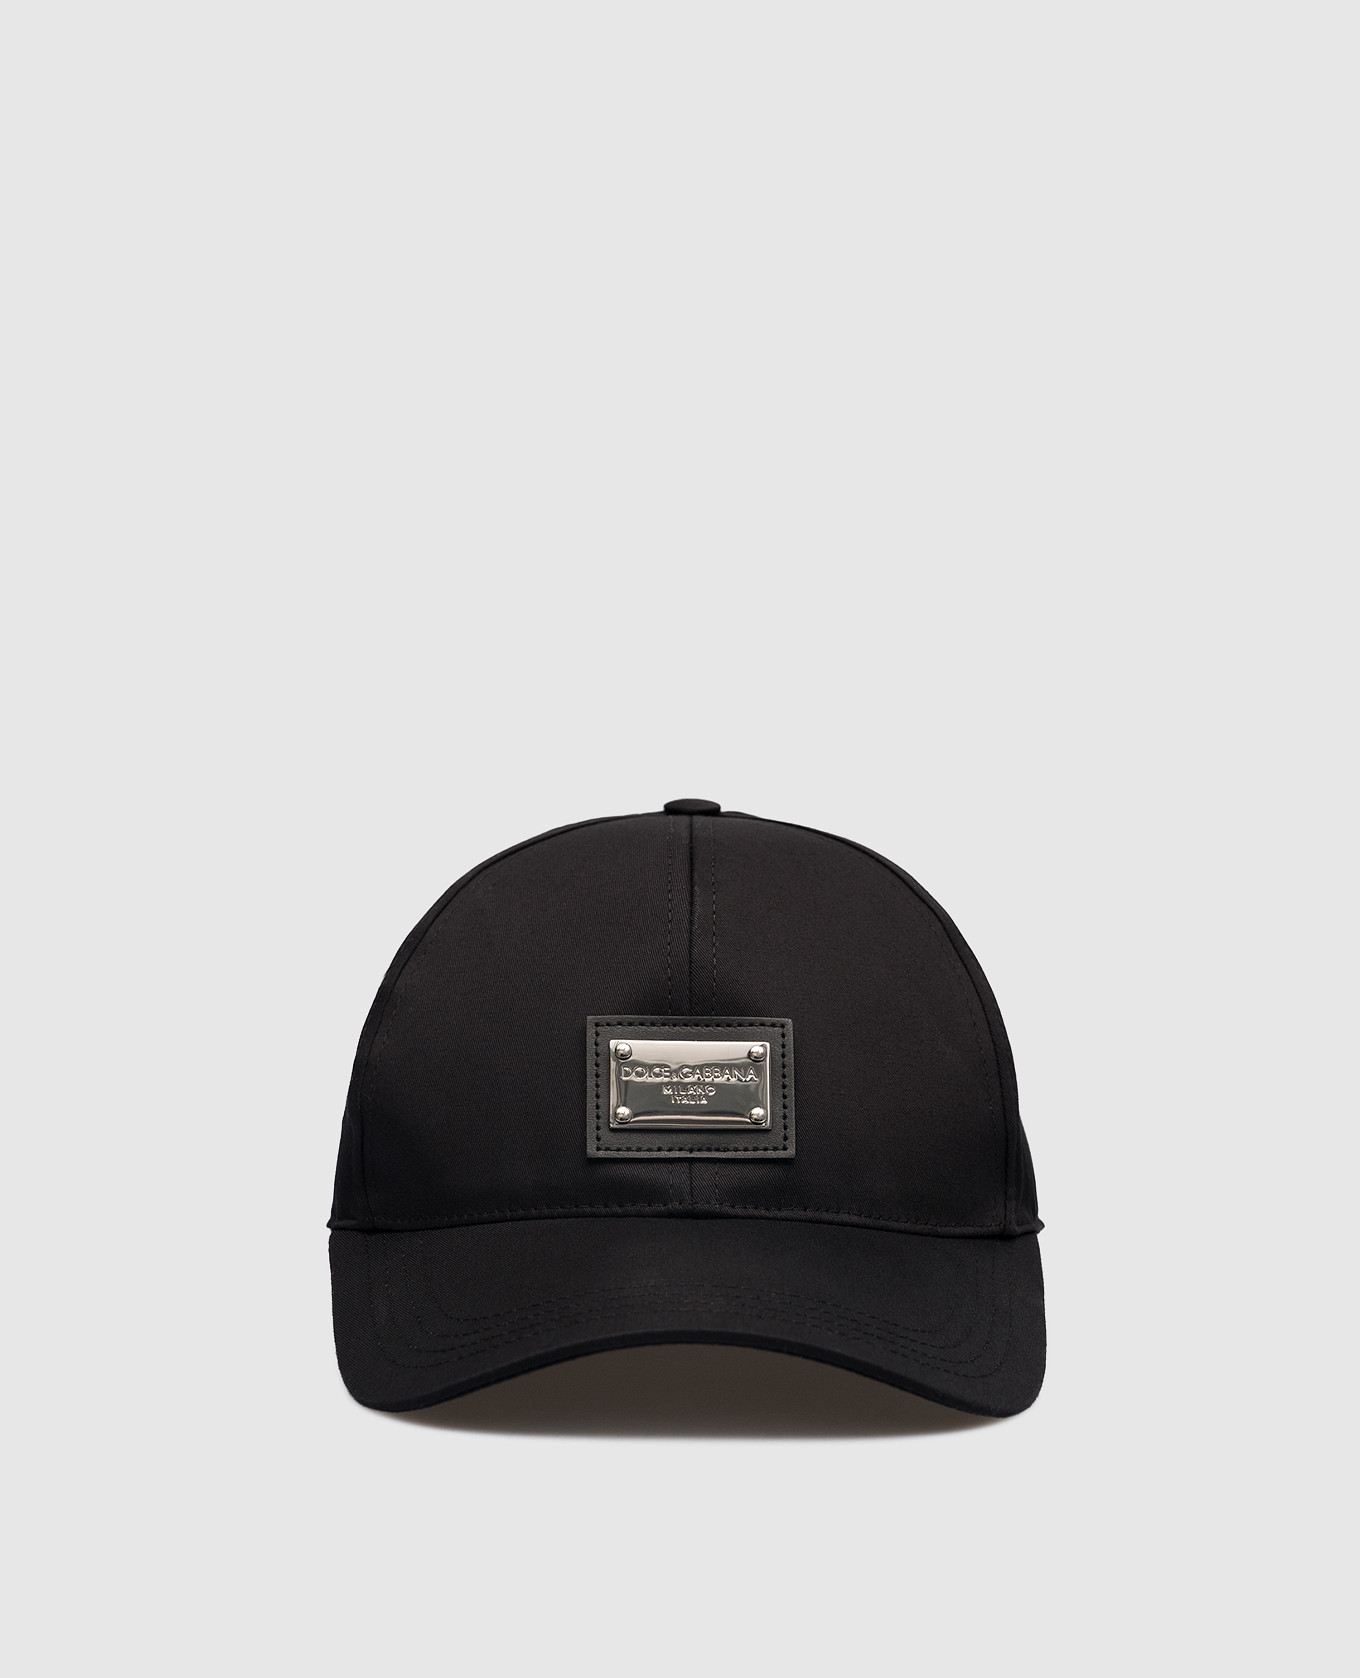 Black cap with metal logo